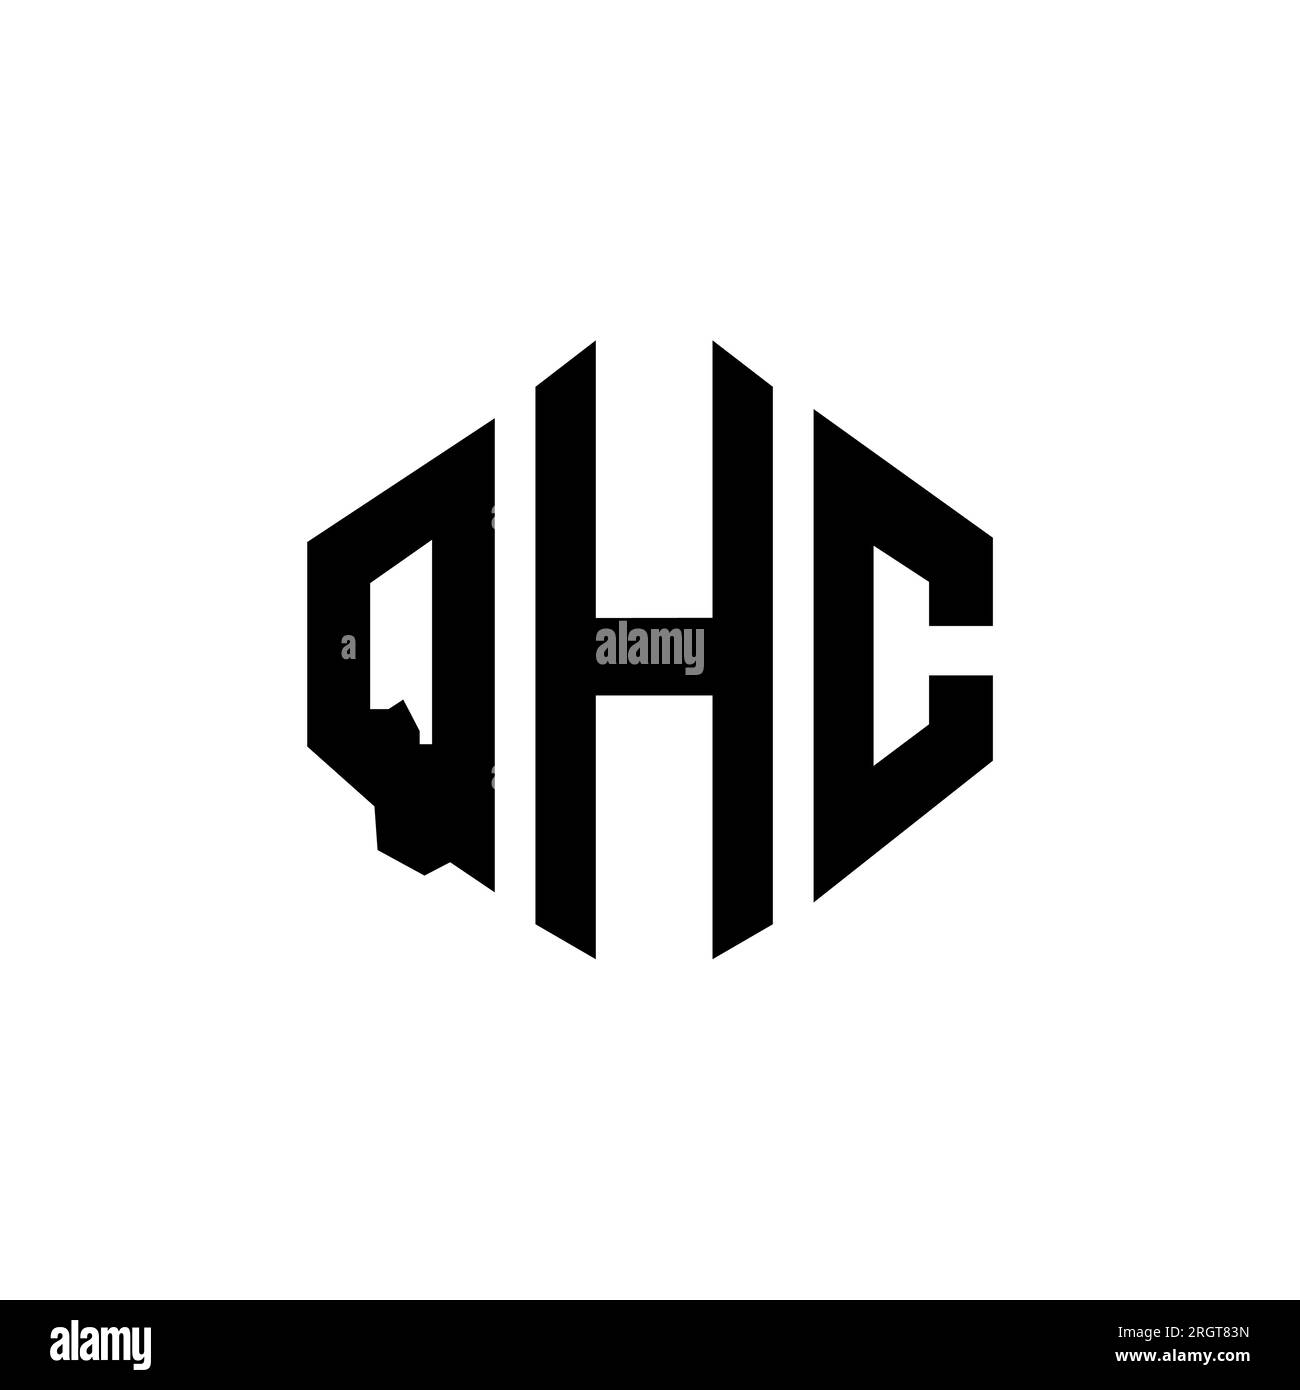 Qhc tech logo hi-res stock photography and images - Alamy